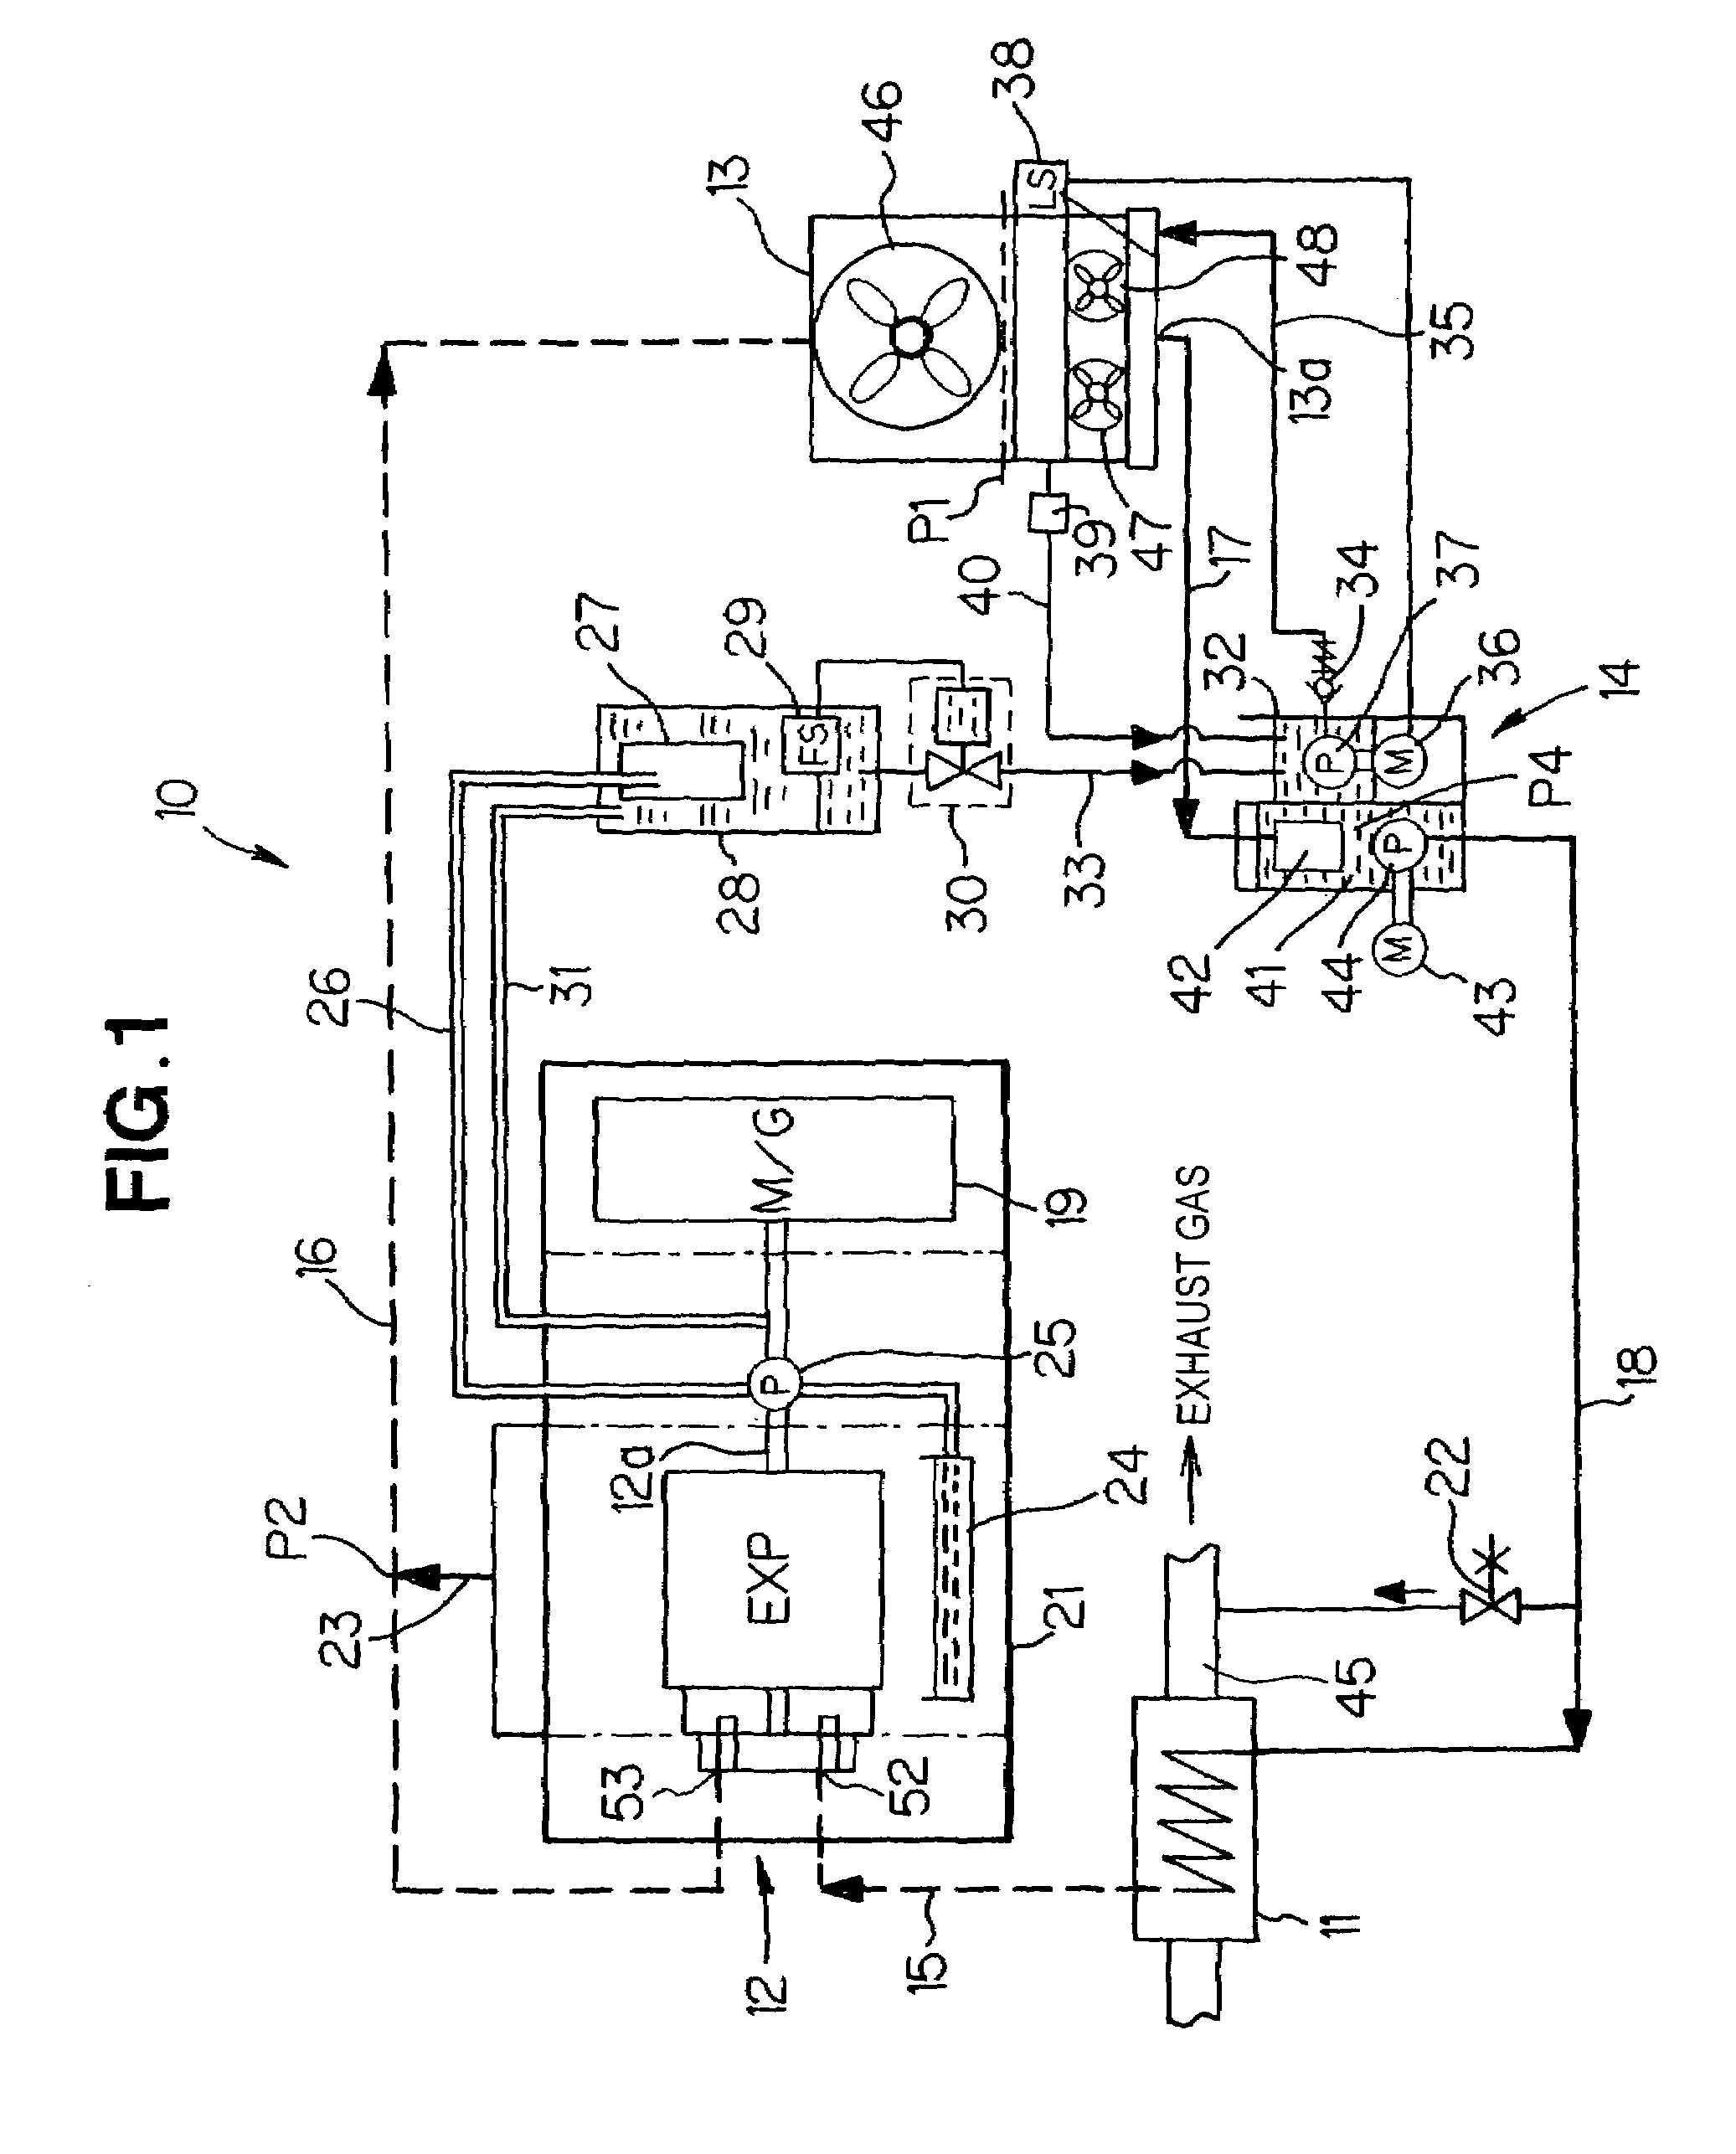 Non-condensing gas discharge device of condenser